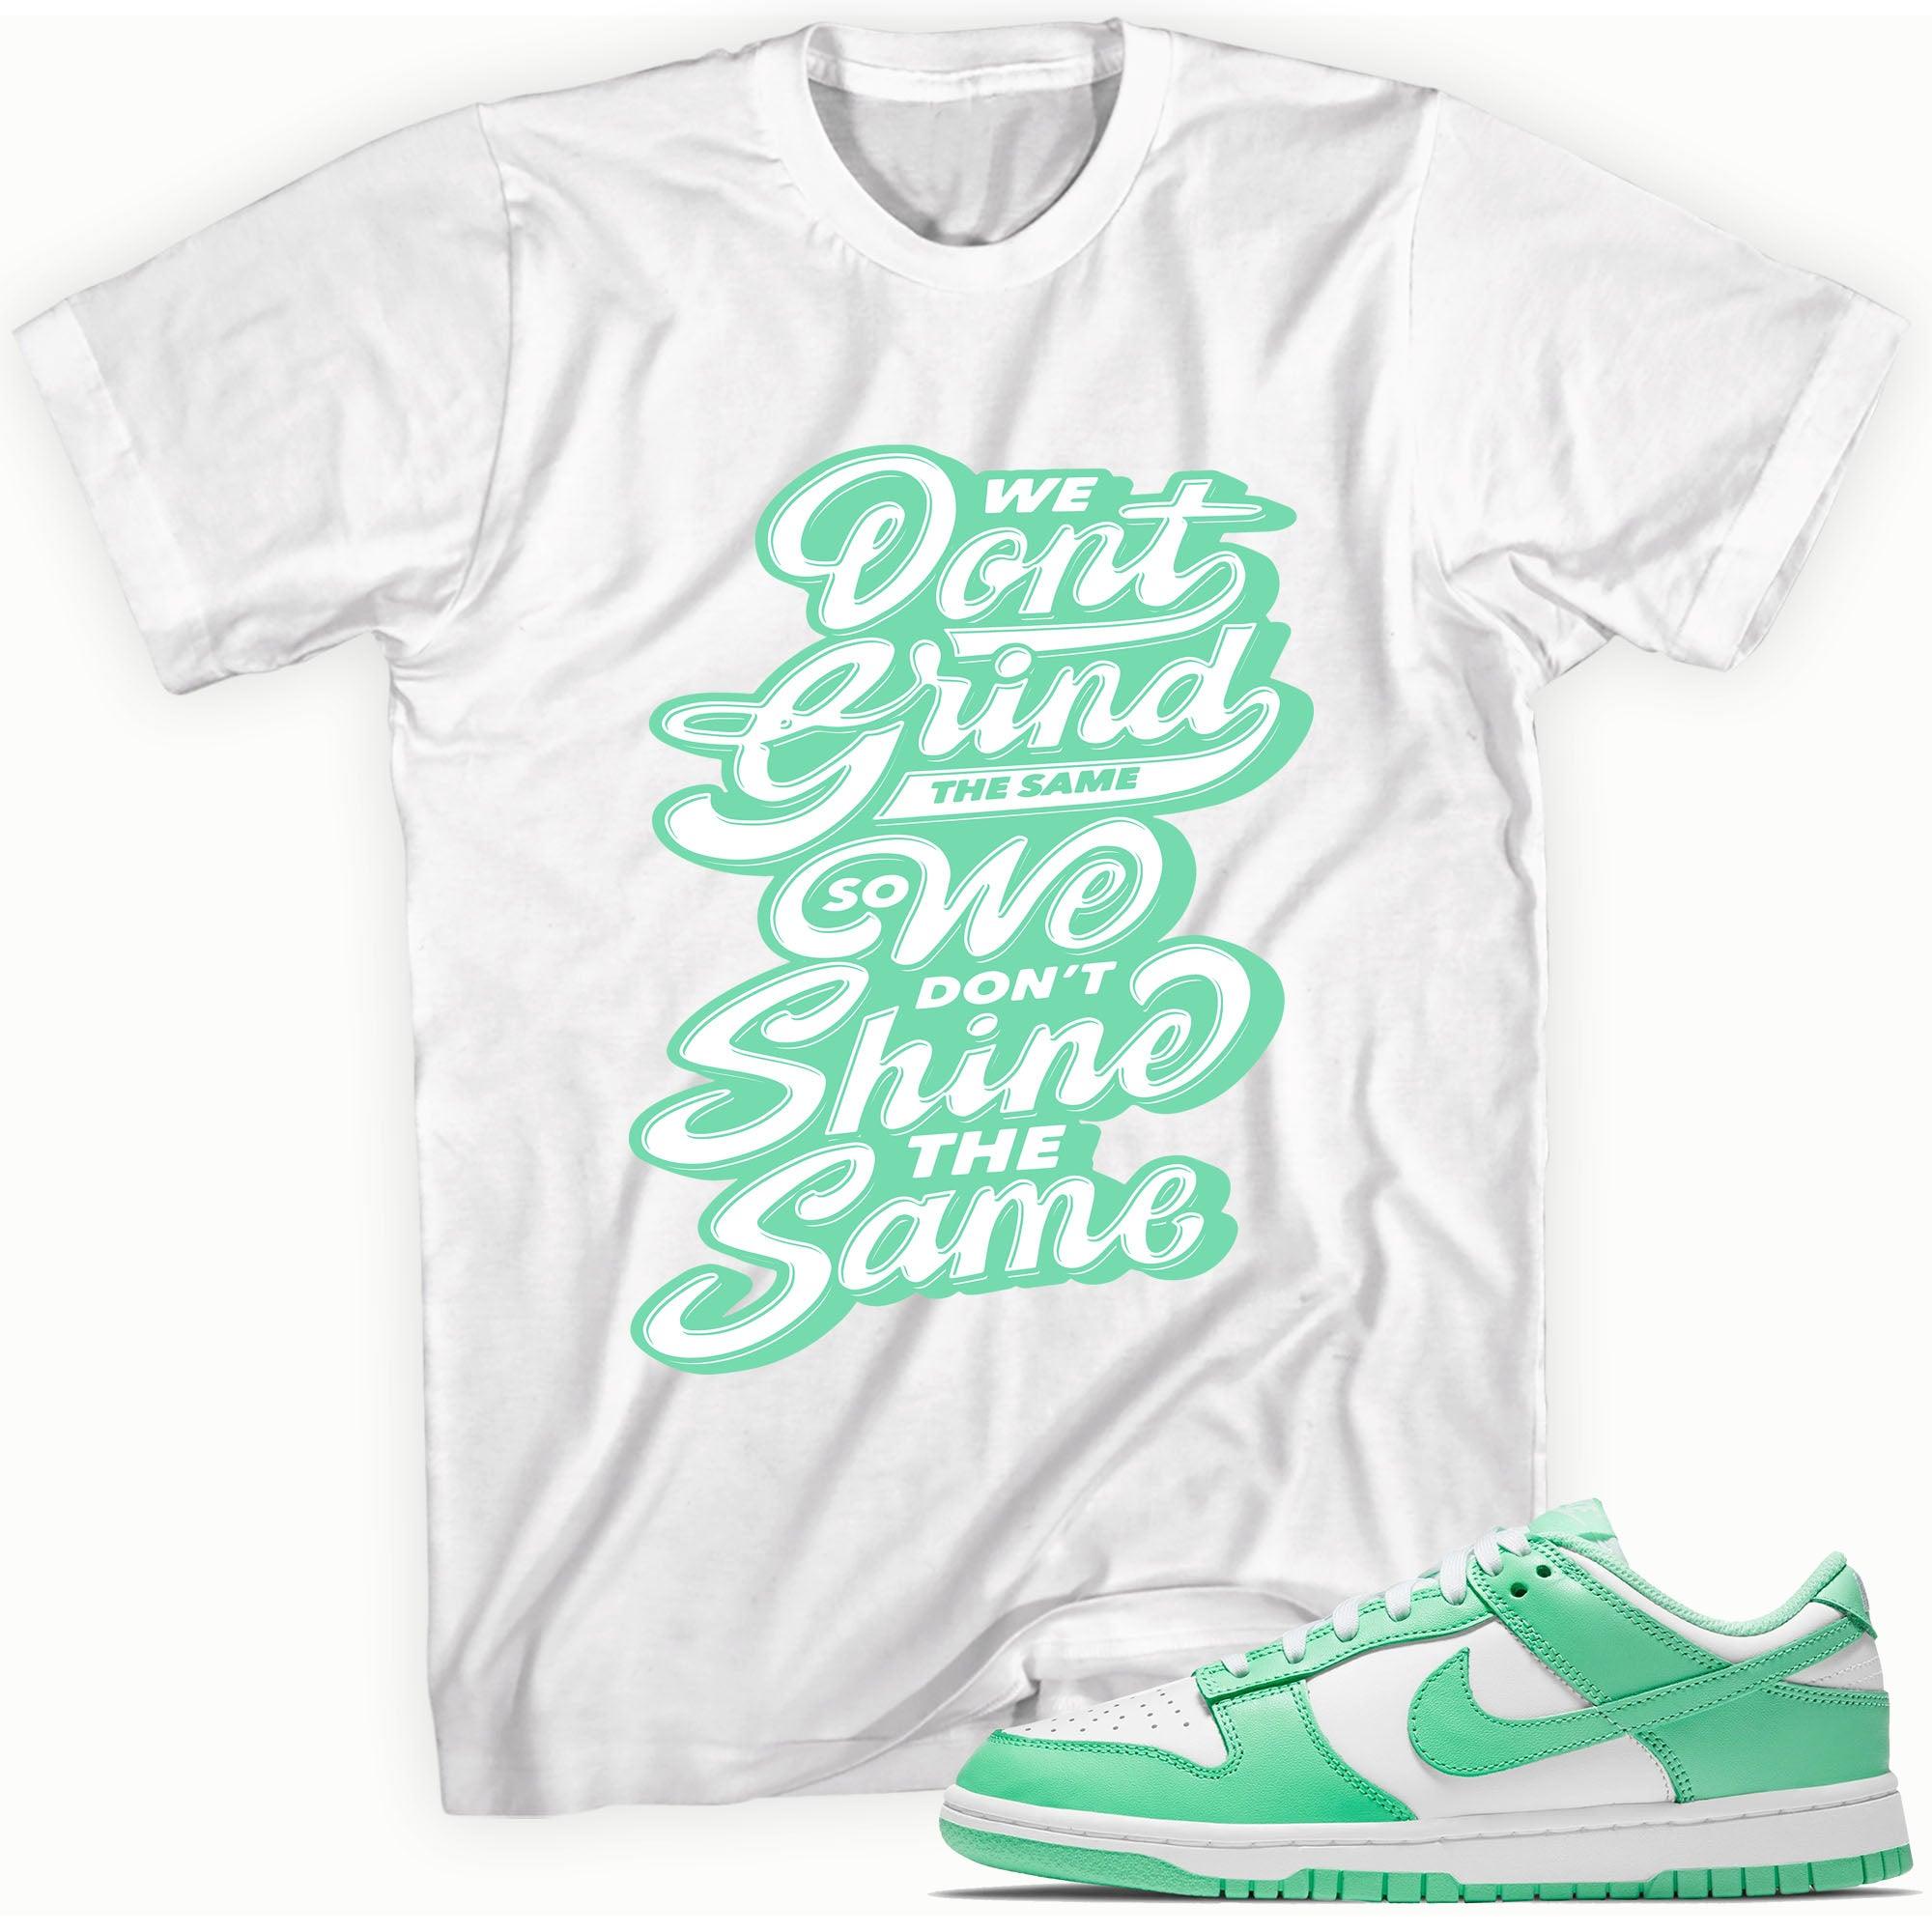 We Don't Grind Shirt Nike Dunks Low Green Glow photo